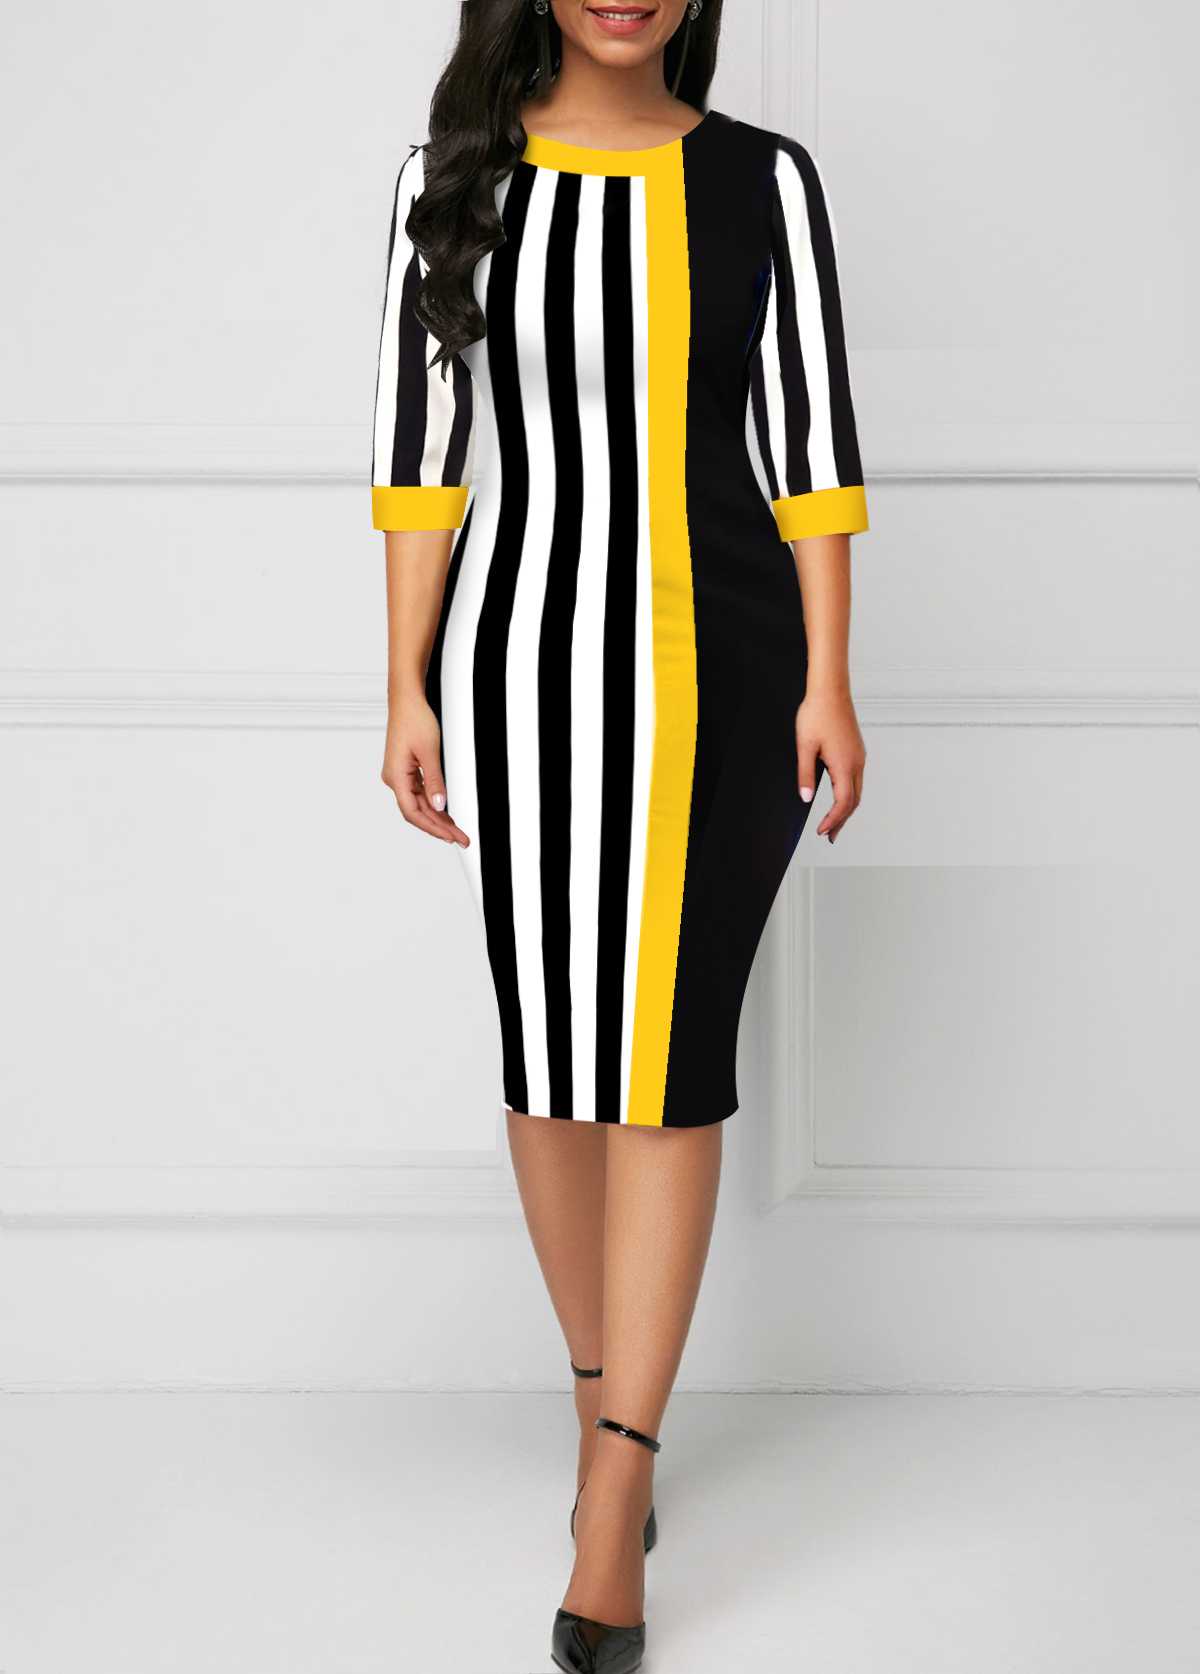 Black Striped Round Neck Bodycon Dress | Rosewe.com - USD $34.98